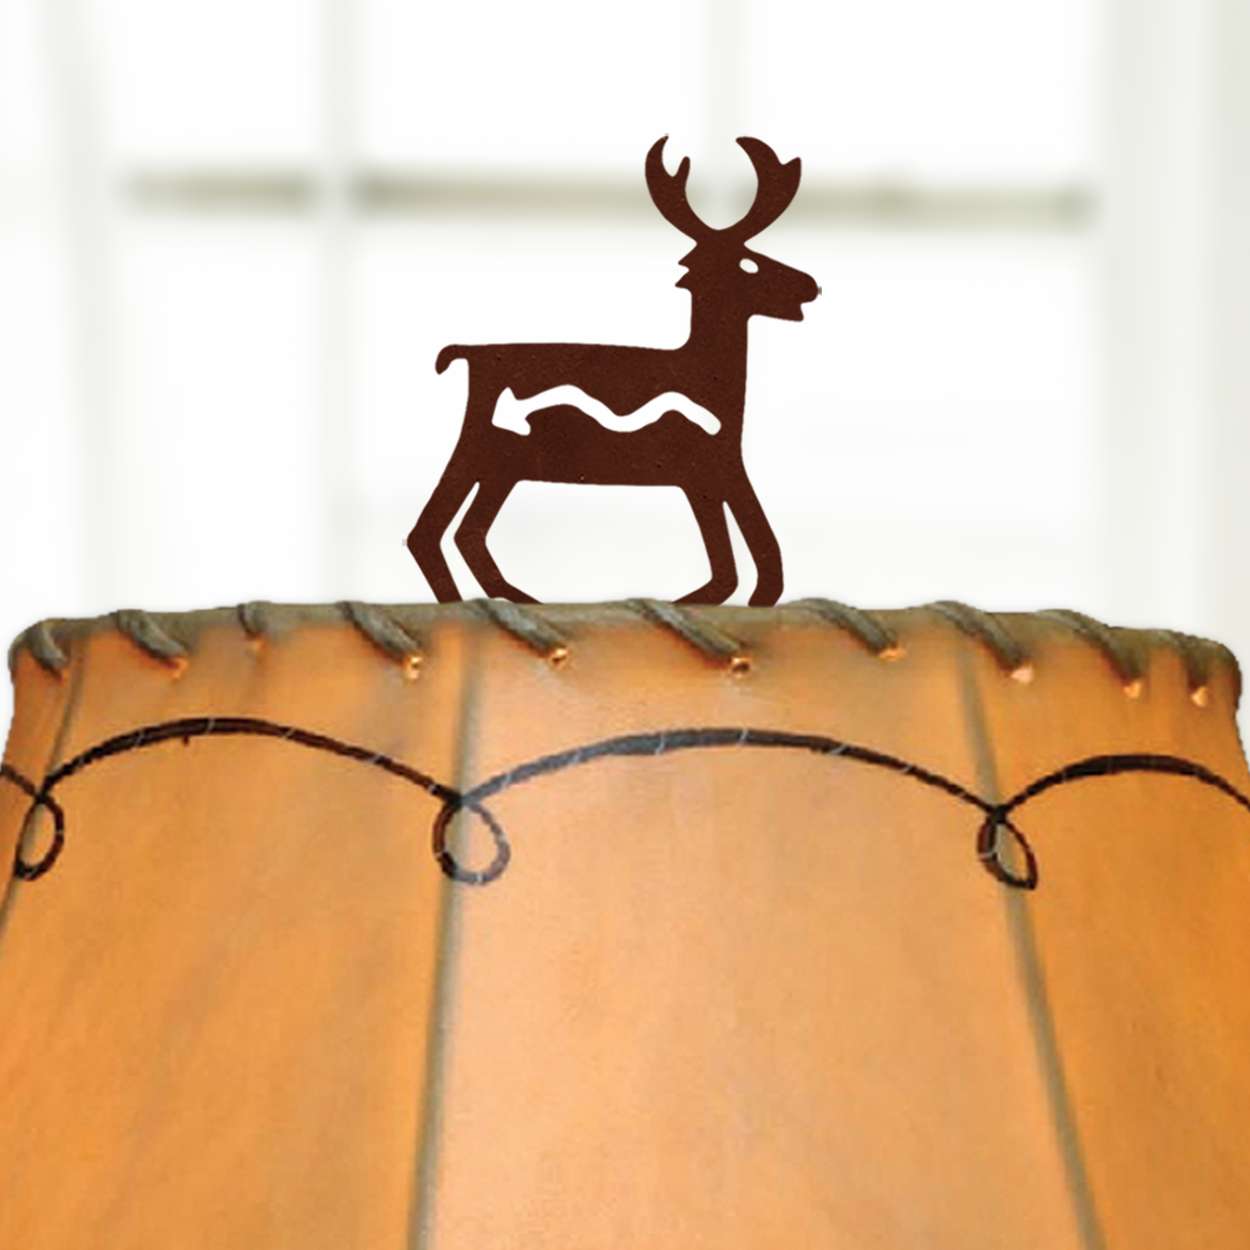 182833RT - Rust Brown Metal Standard Lamp Finial - Petroglyph Deer